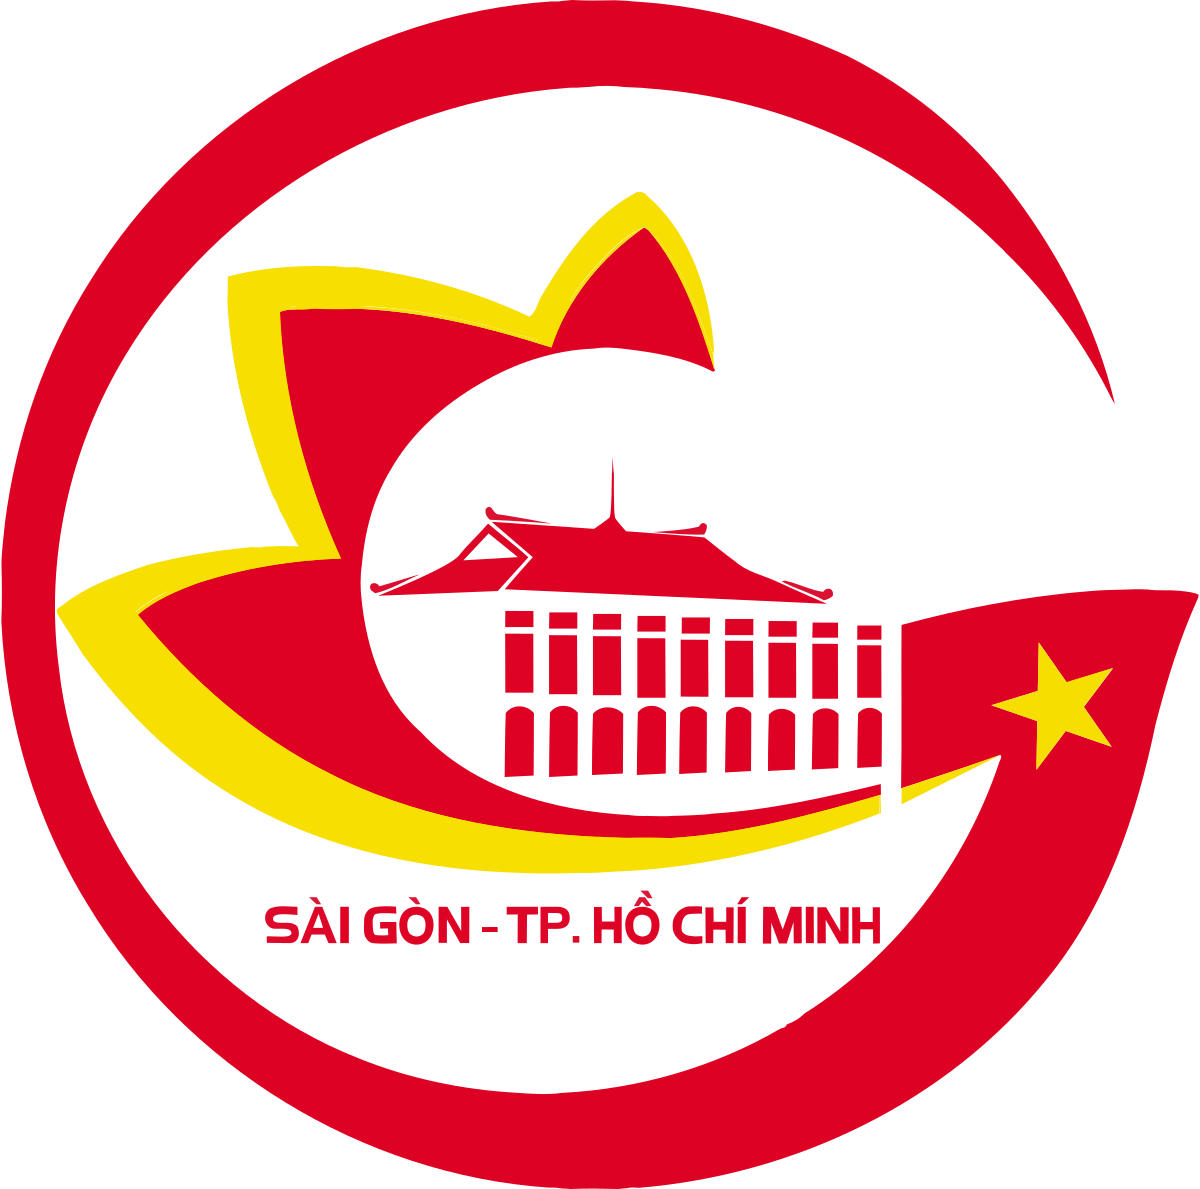 Nữ TP Ho Chi Minh B